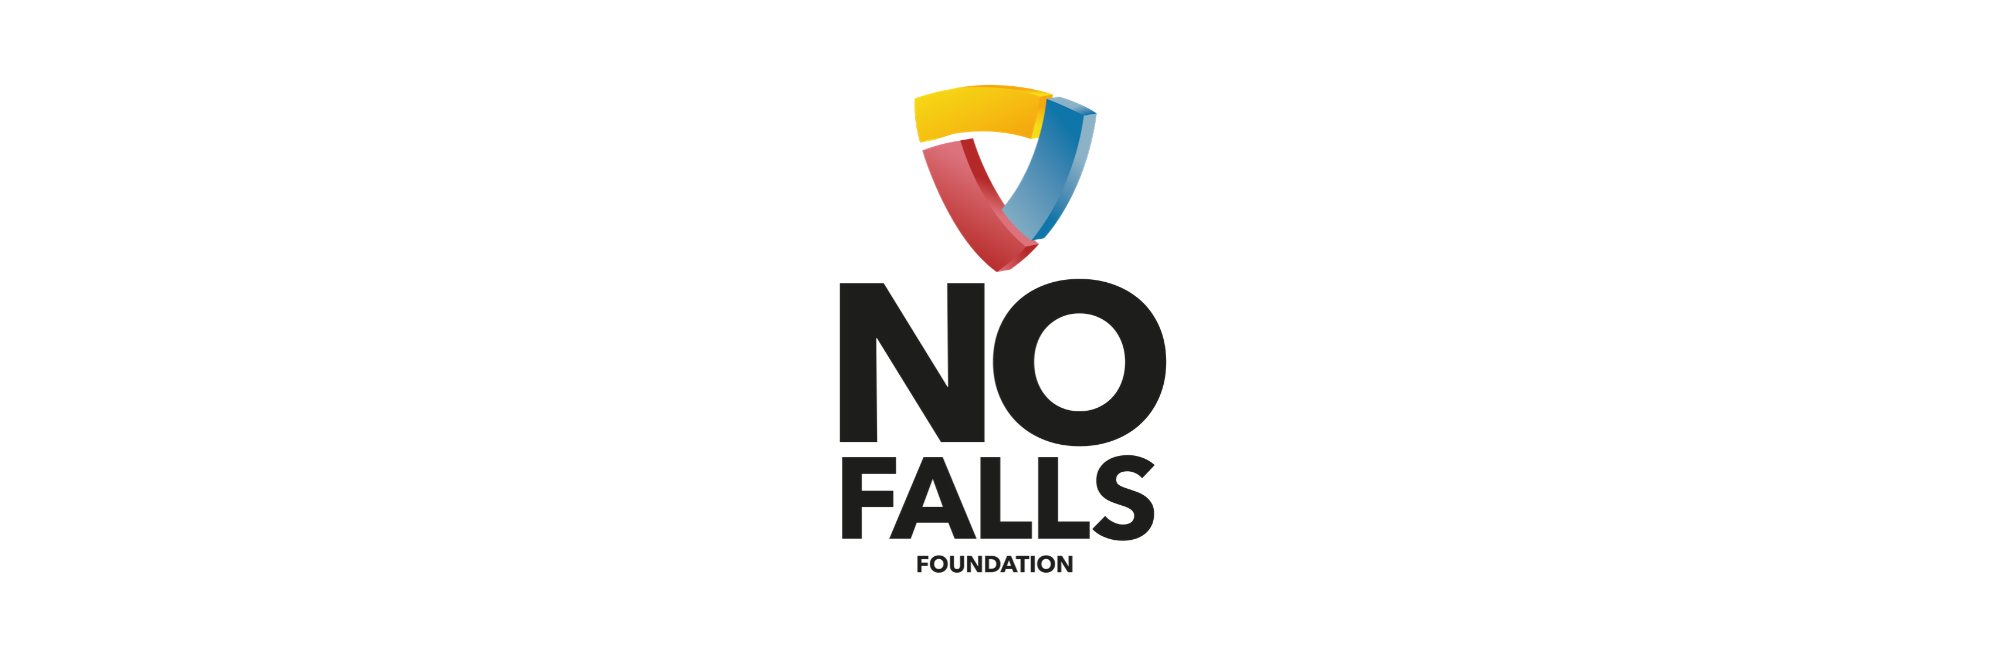 No Falls Foundation news header